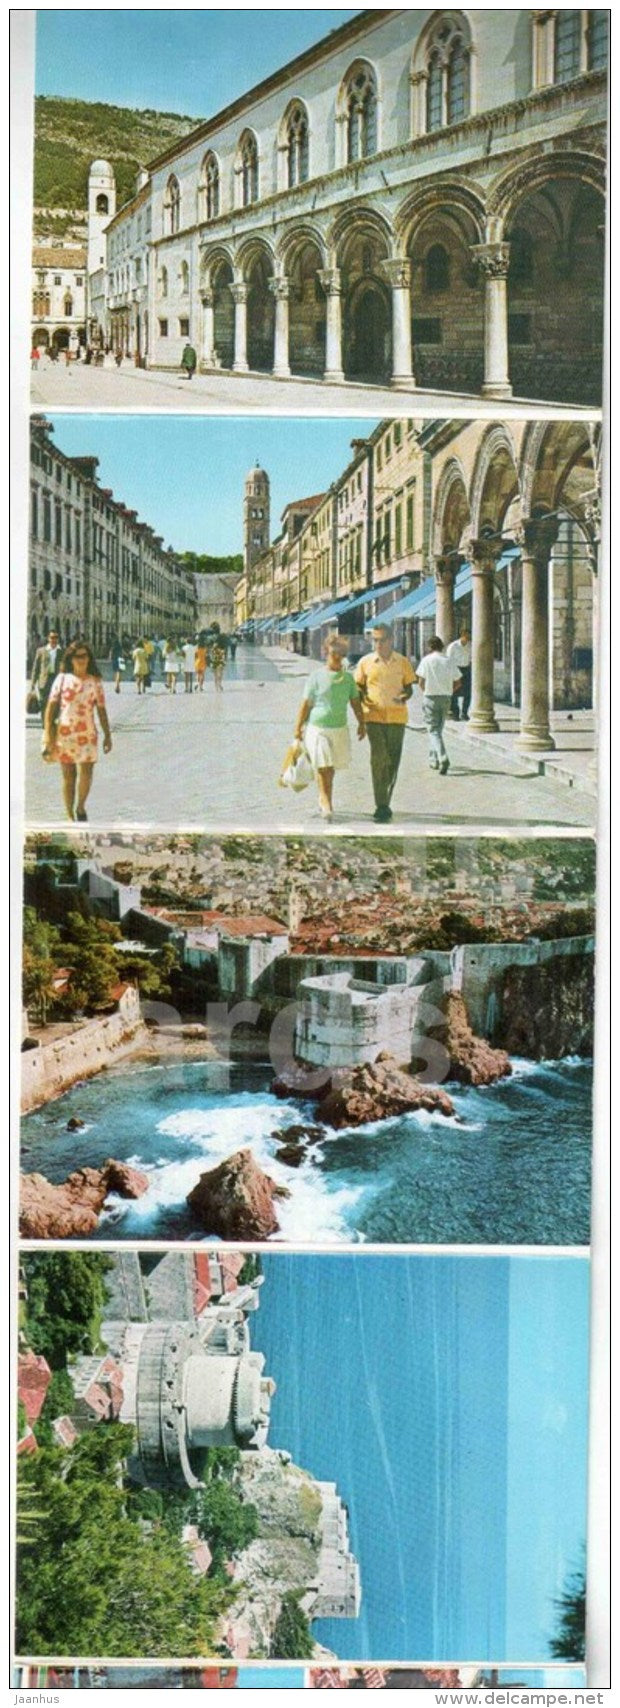 Dubrovnik - mini photo book - leporello - Croatia - Yugoslavia - unused - JH Postcards